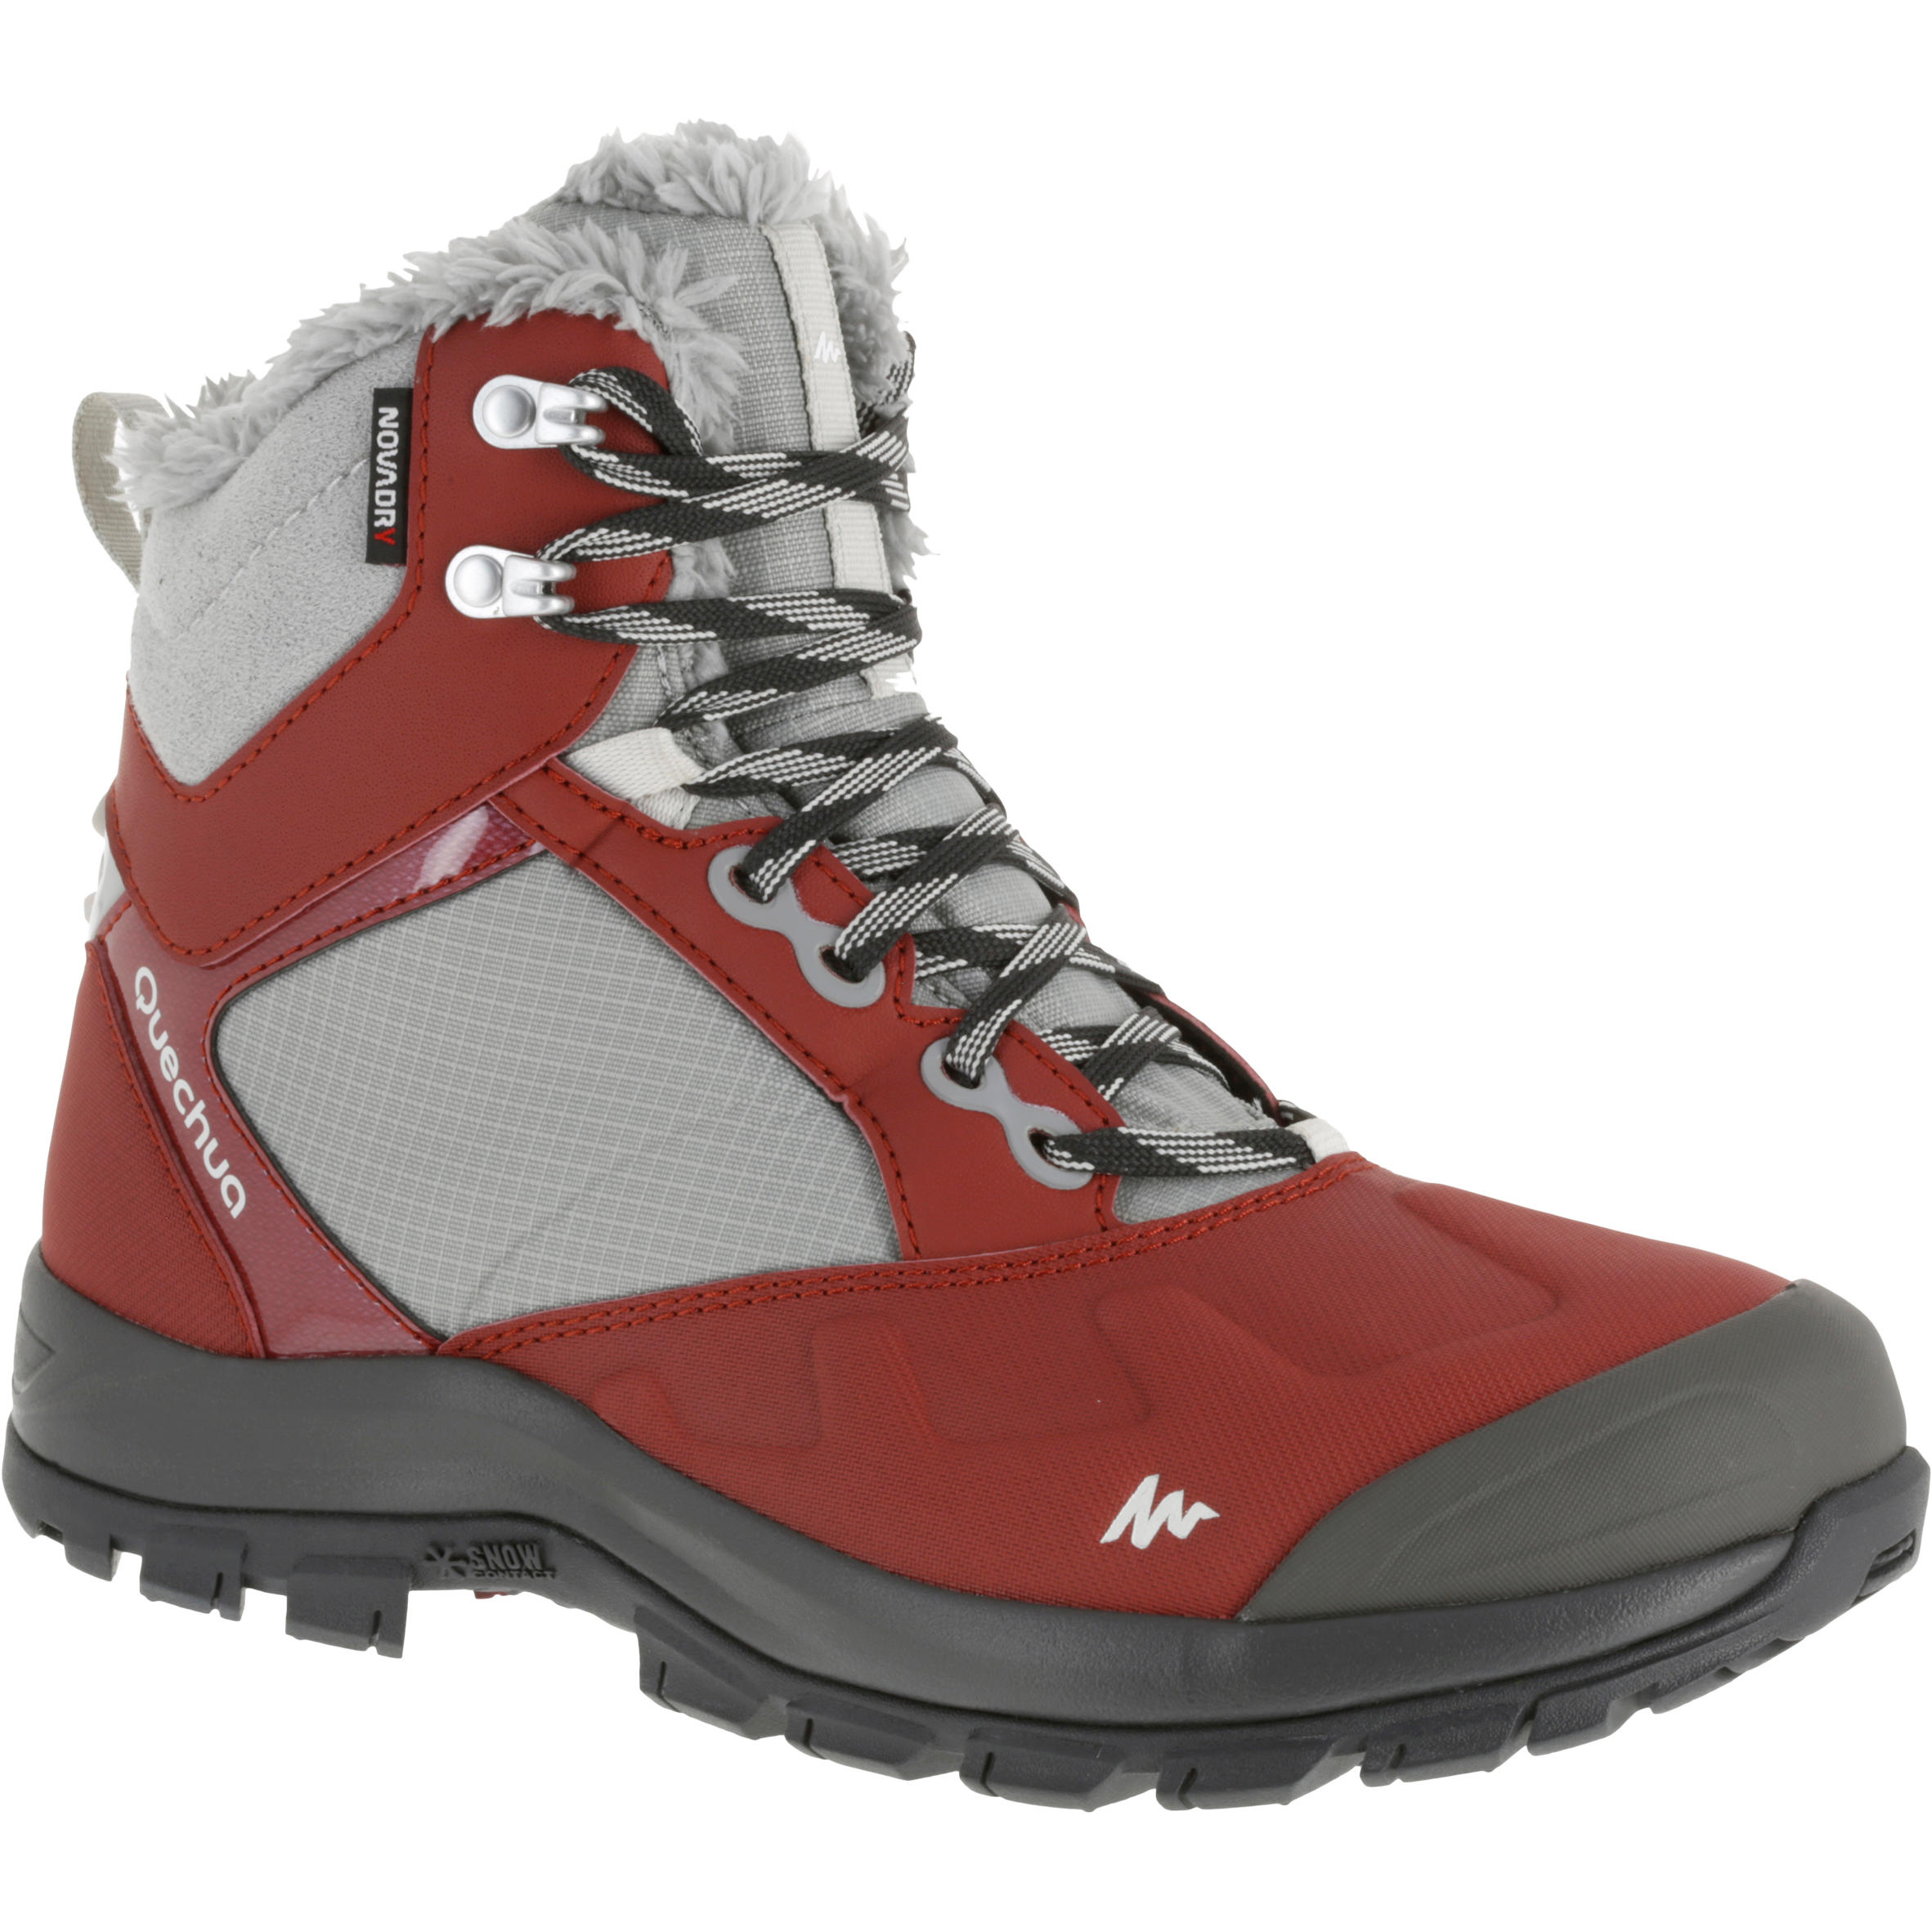 QUECHUA Forclaz 500 Waterproof Women'S Hiking Boots - Burgundy